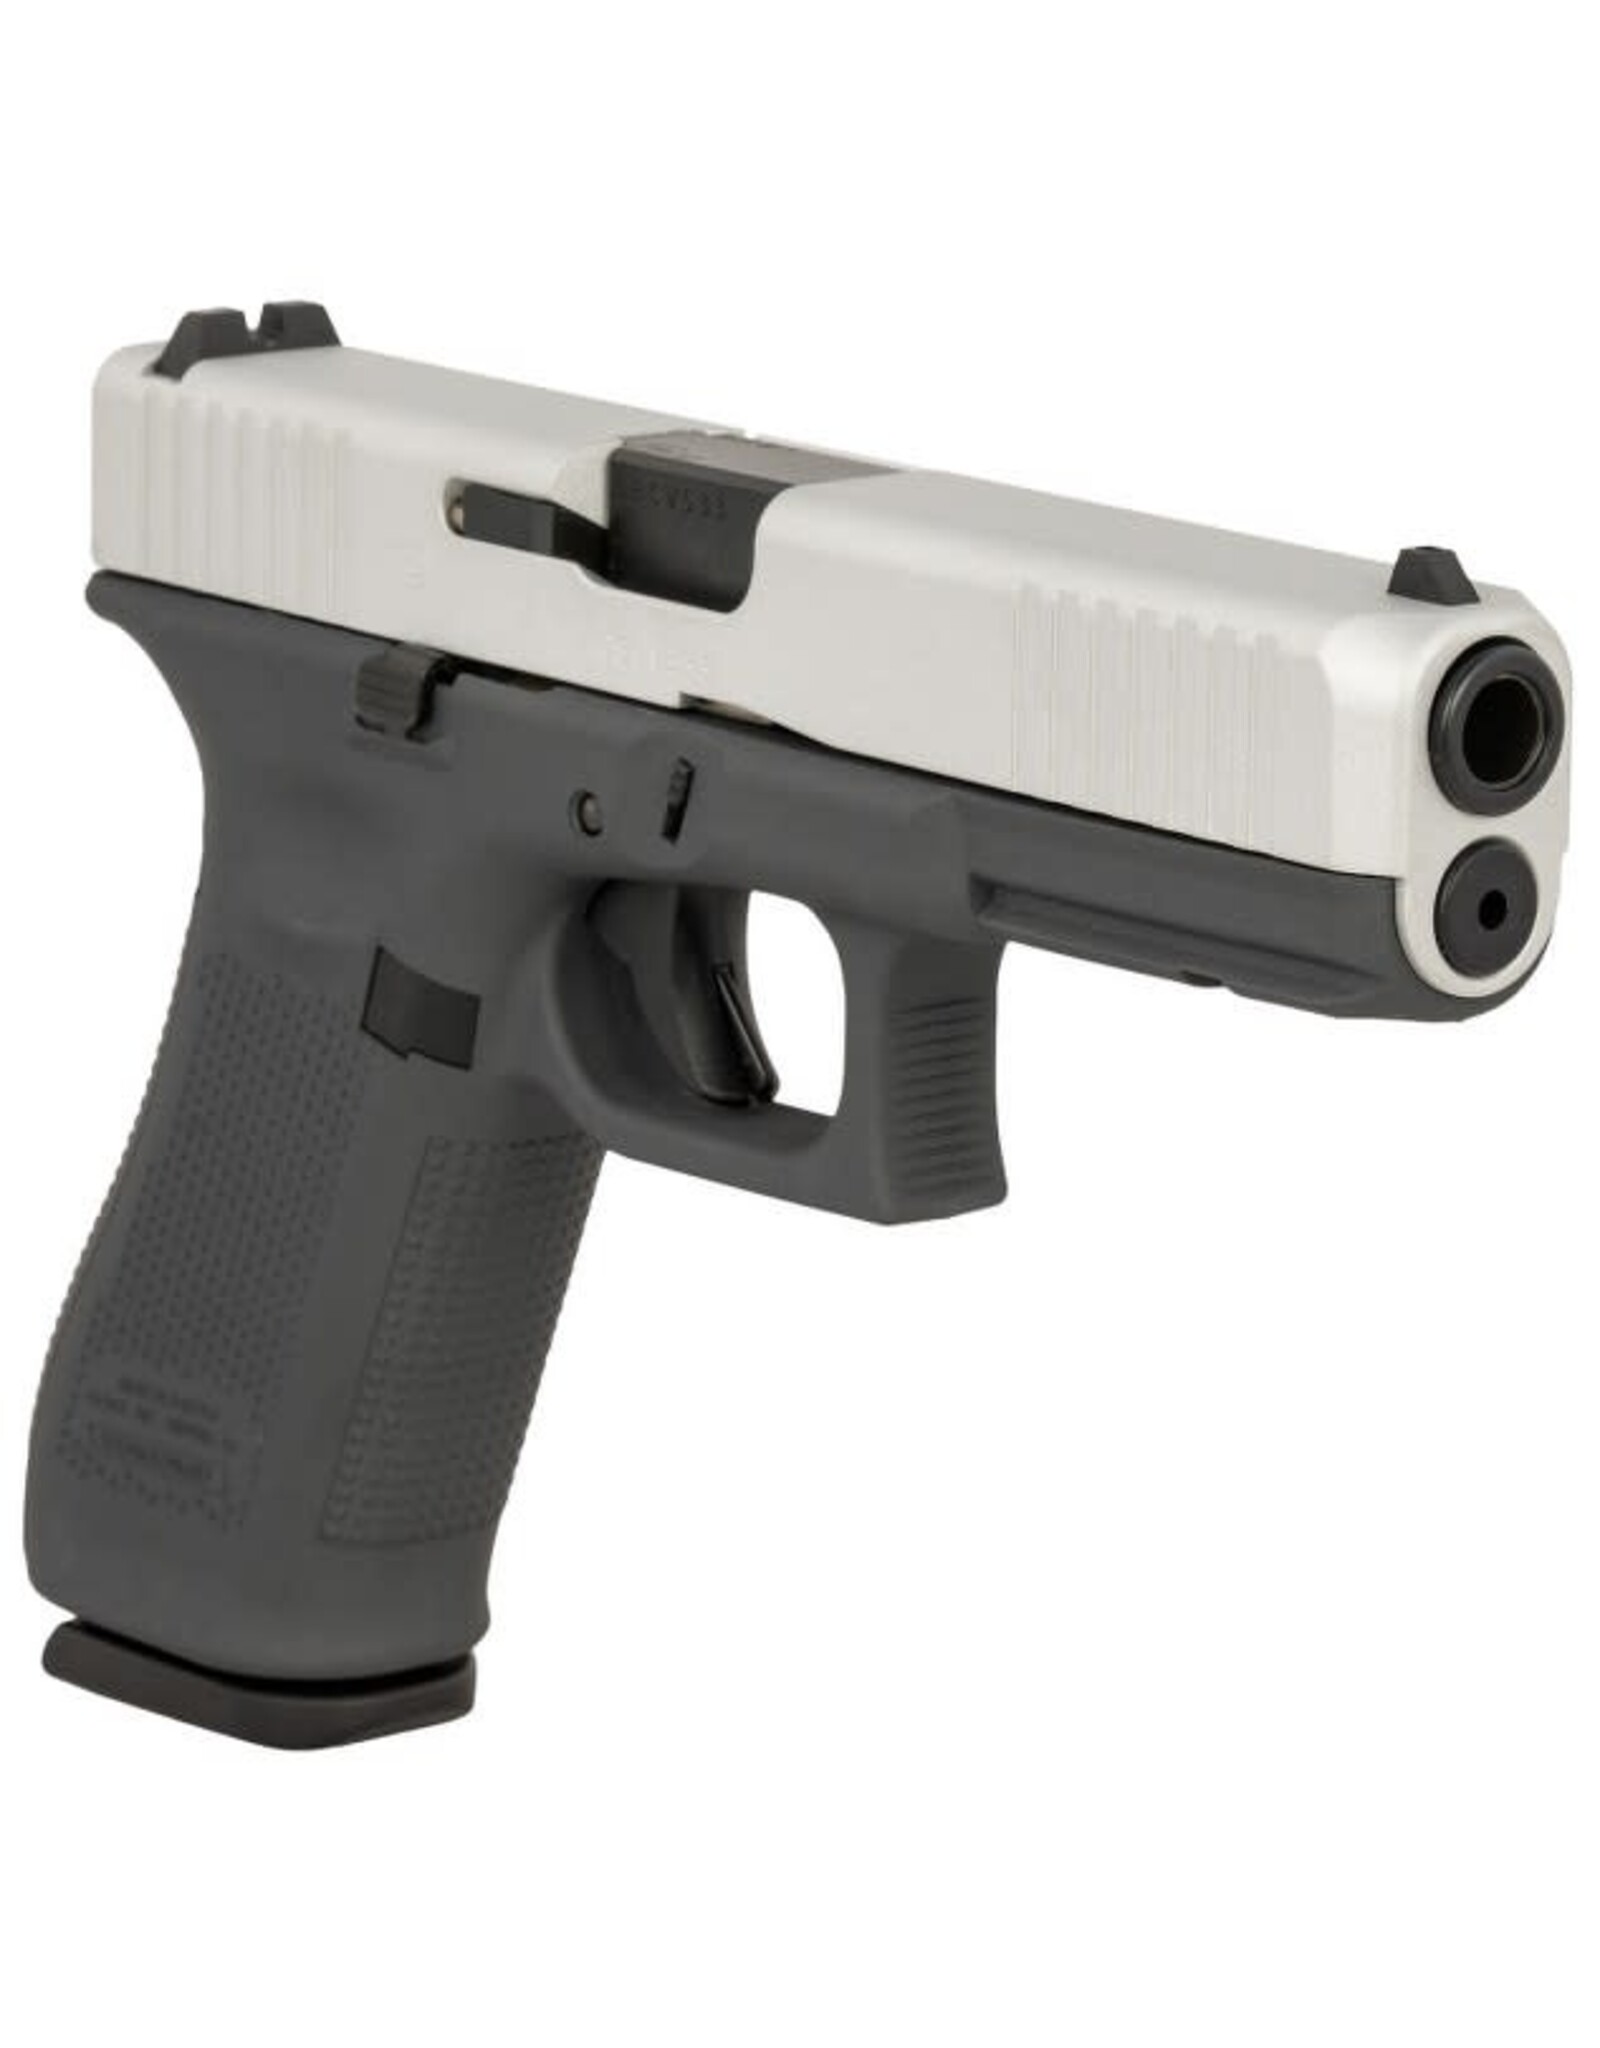 GLOCK Glock G17 Gen5 9mm 17+1 Rnd 4.49" bbl Satin Aluminum Cerakote Serrated Slide Sniper Gray Frame